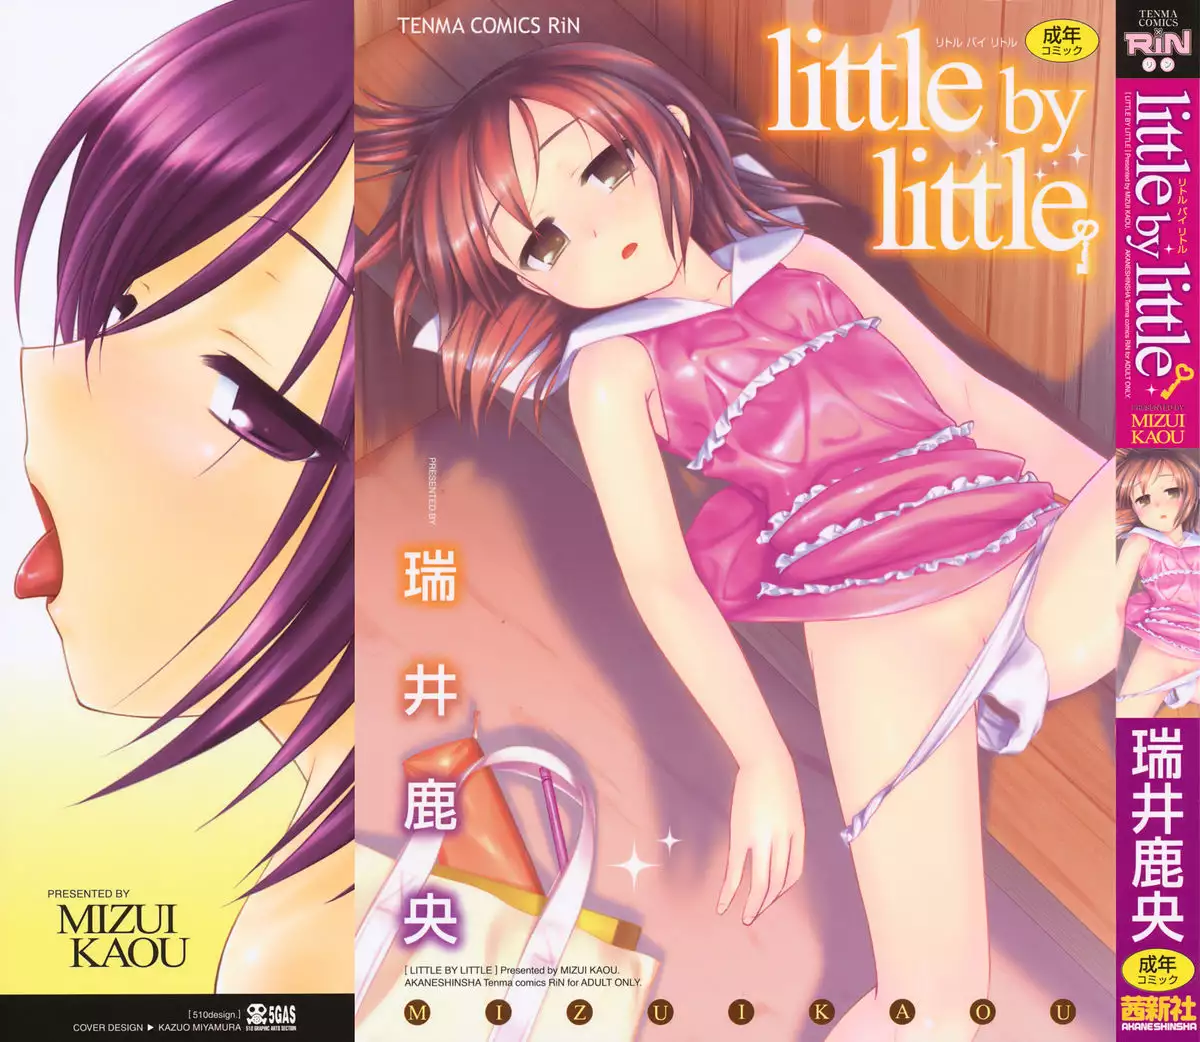 Mizui Kaou] Little By Little - Hentai.name